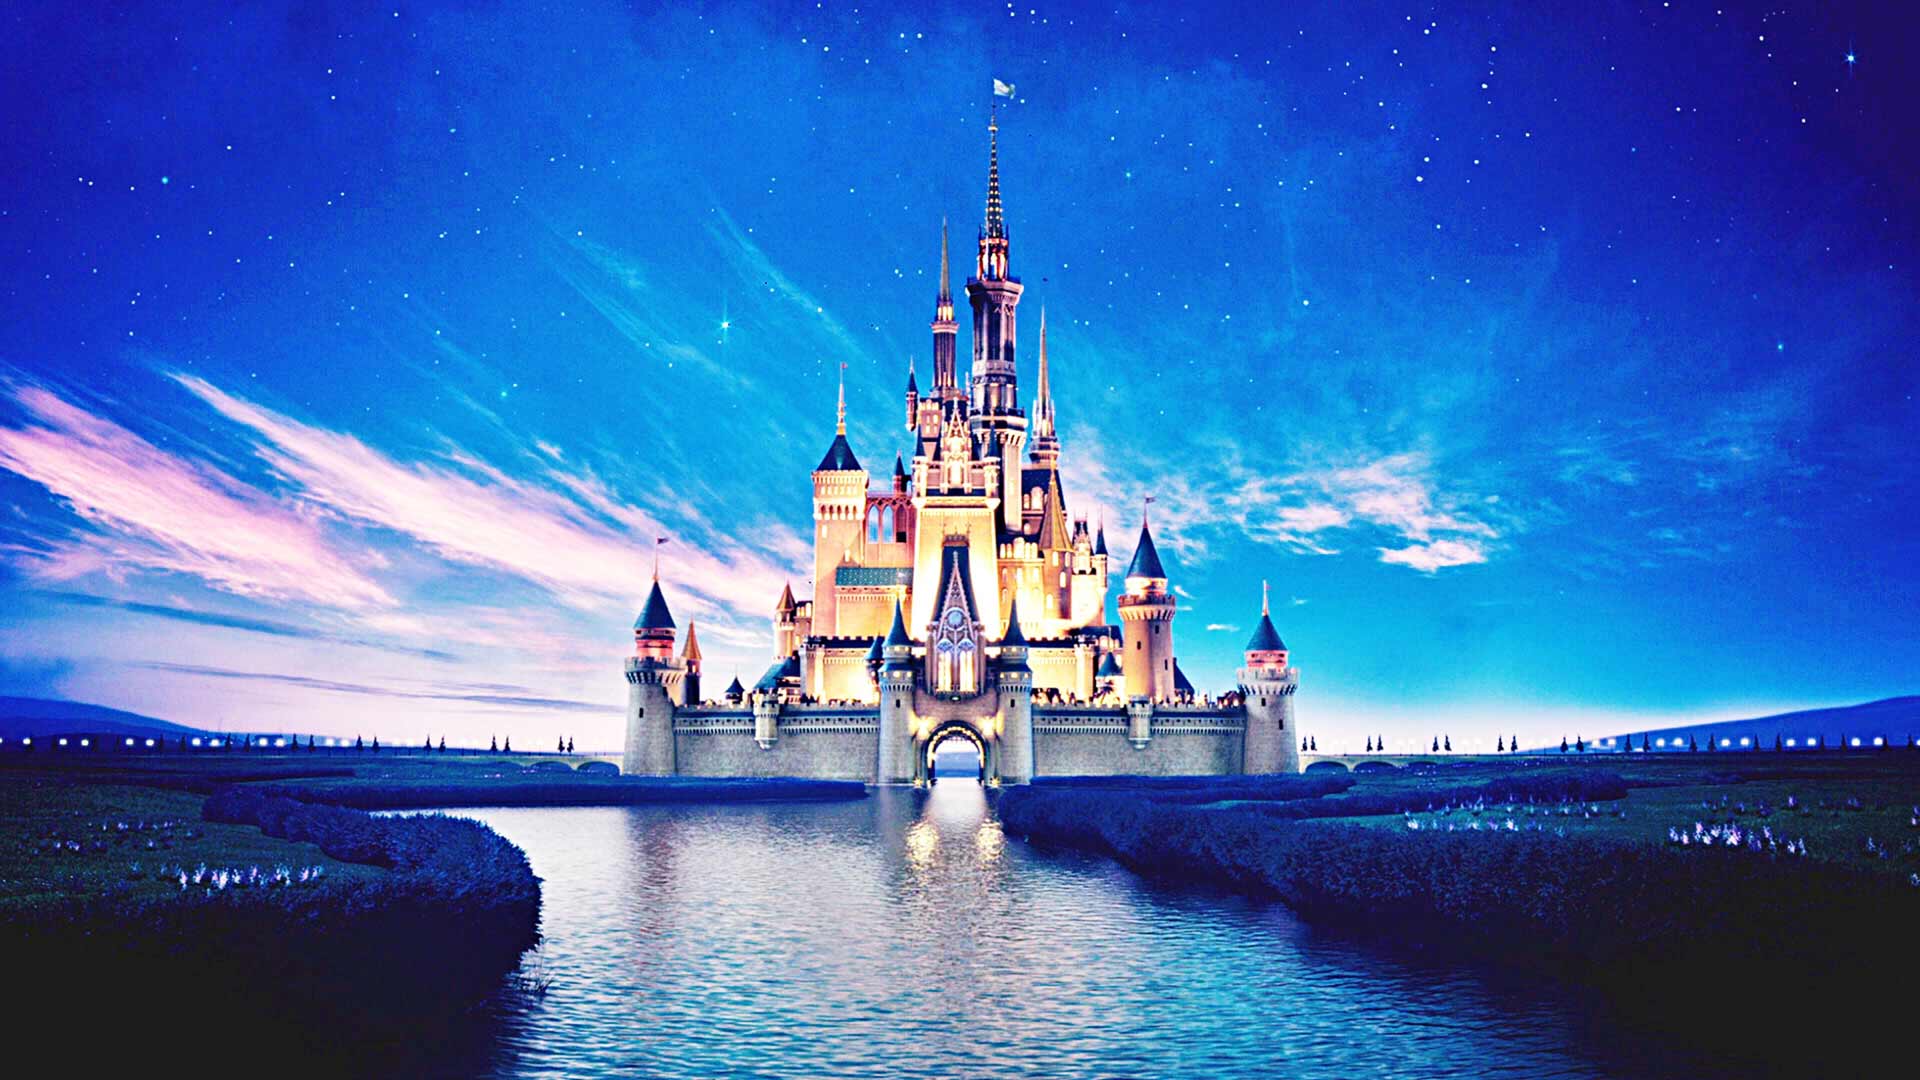 Download Disney Castle Wallpaper Widescreen pictures in high